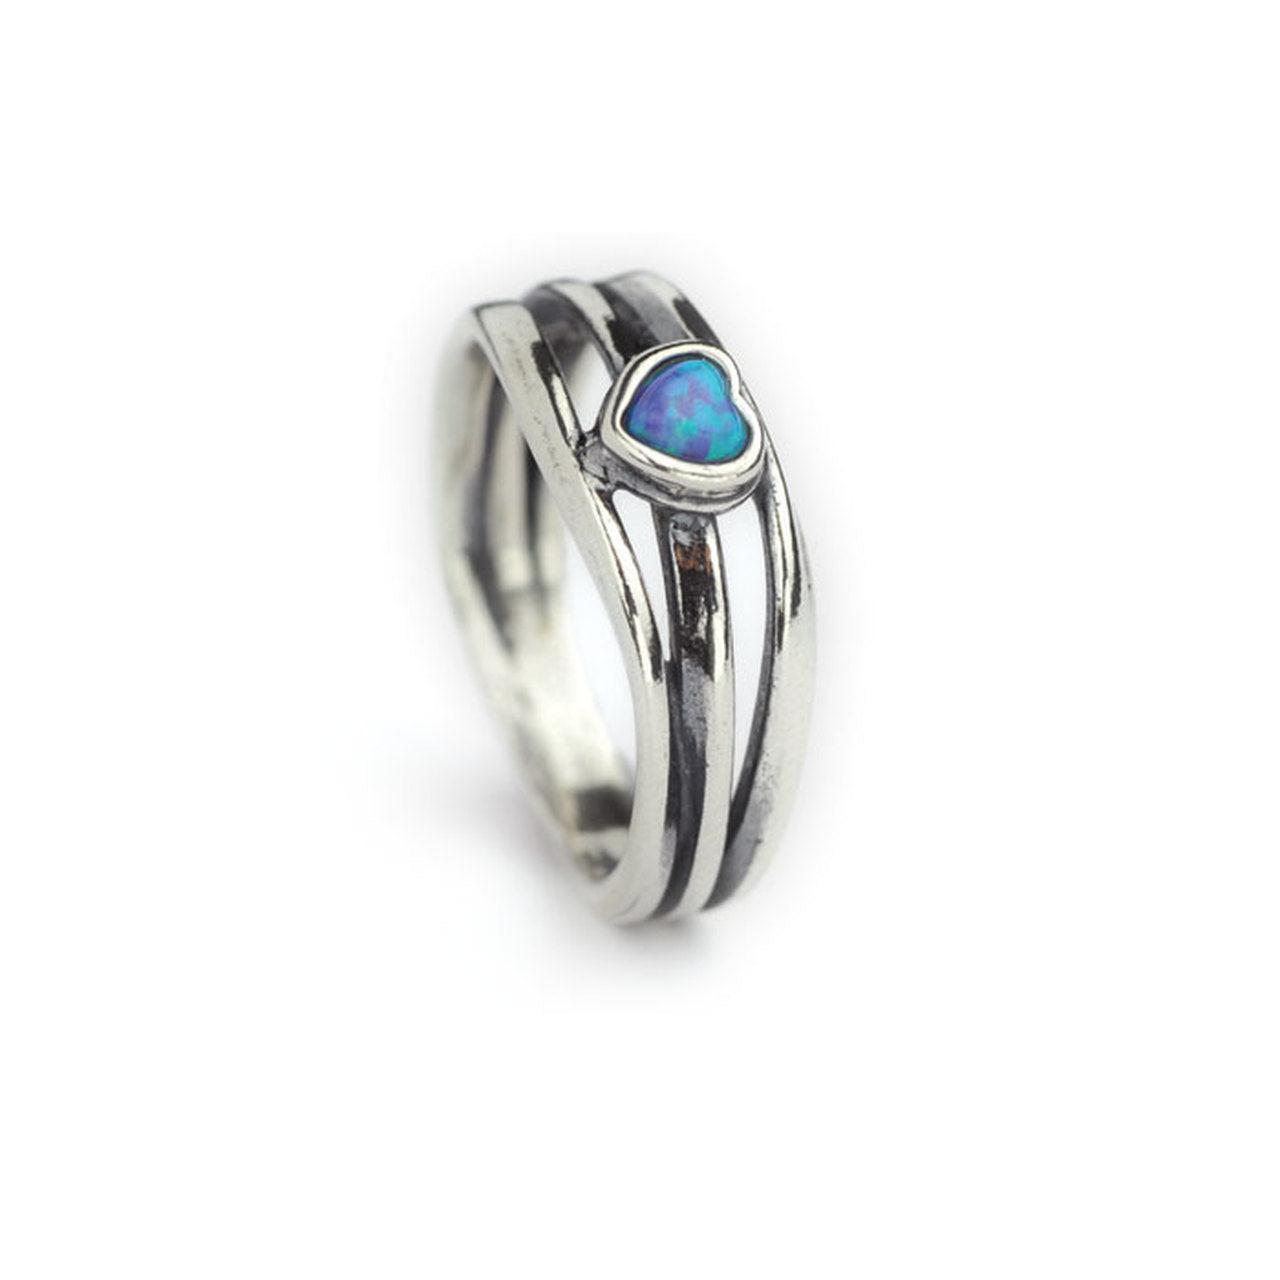 Opal Love Heart Ring - The Nancy Smillie Shop - Art, Jewellery & Designer Gifts Glasgow